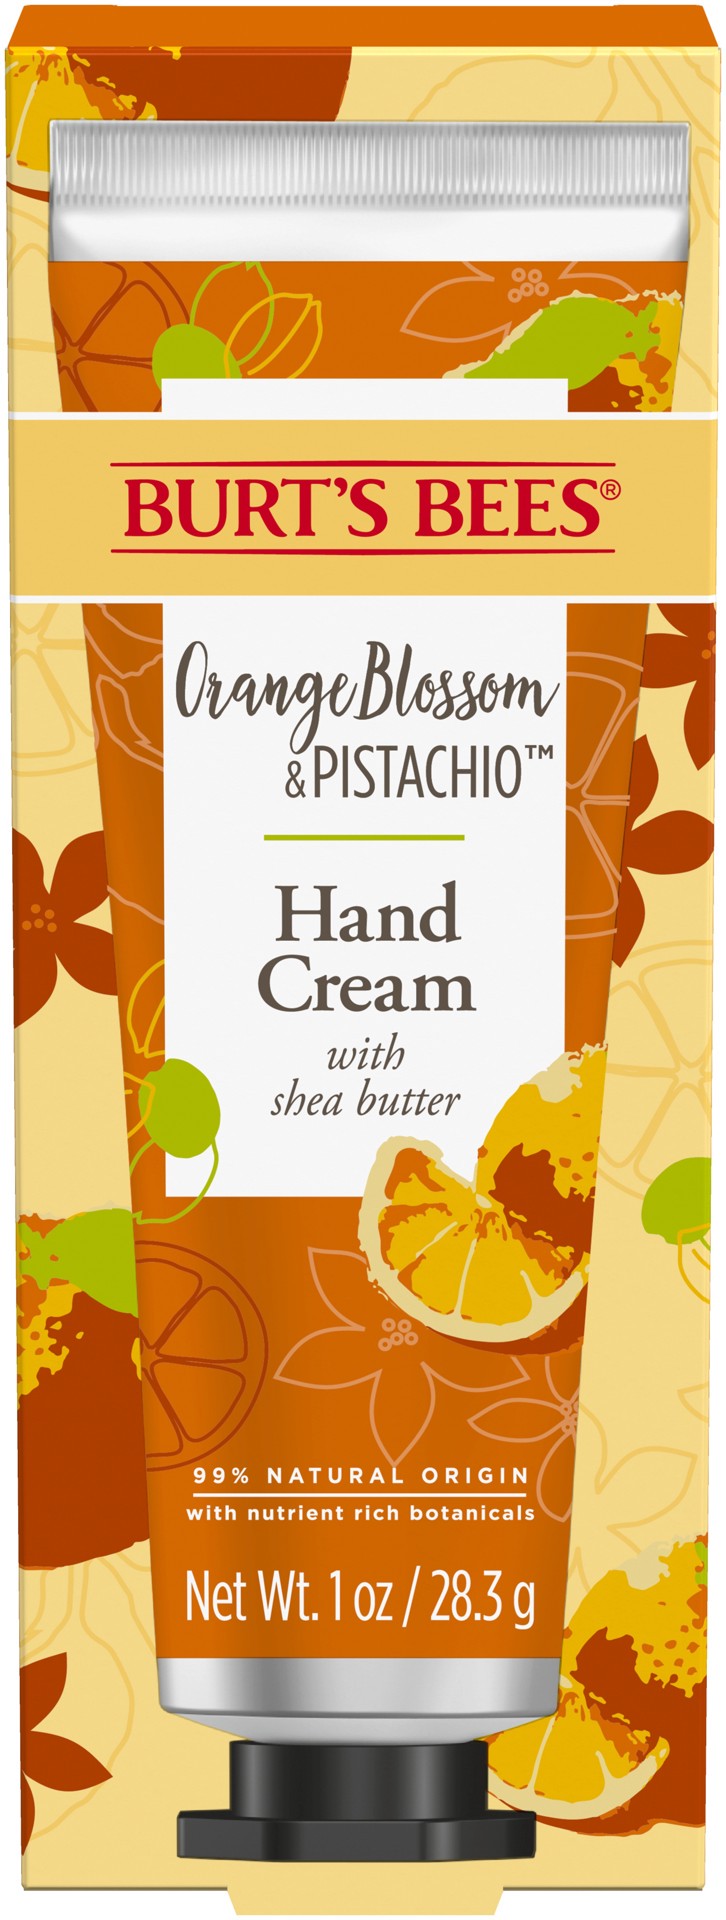 slide 1 of 24, Burt's Bees Burt''s Bees Orange Blossom and Pistachio Hand Cream with Shea Butter, 1 Ounce, 1 oz